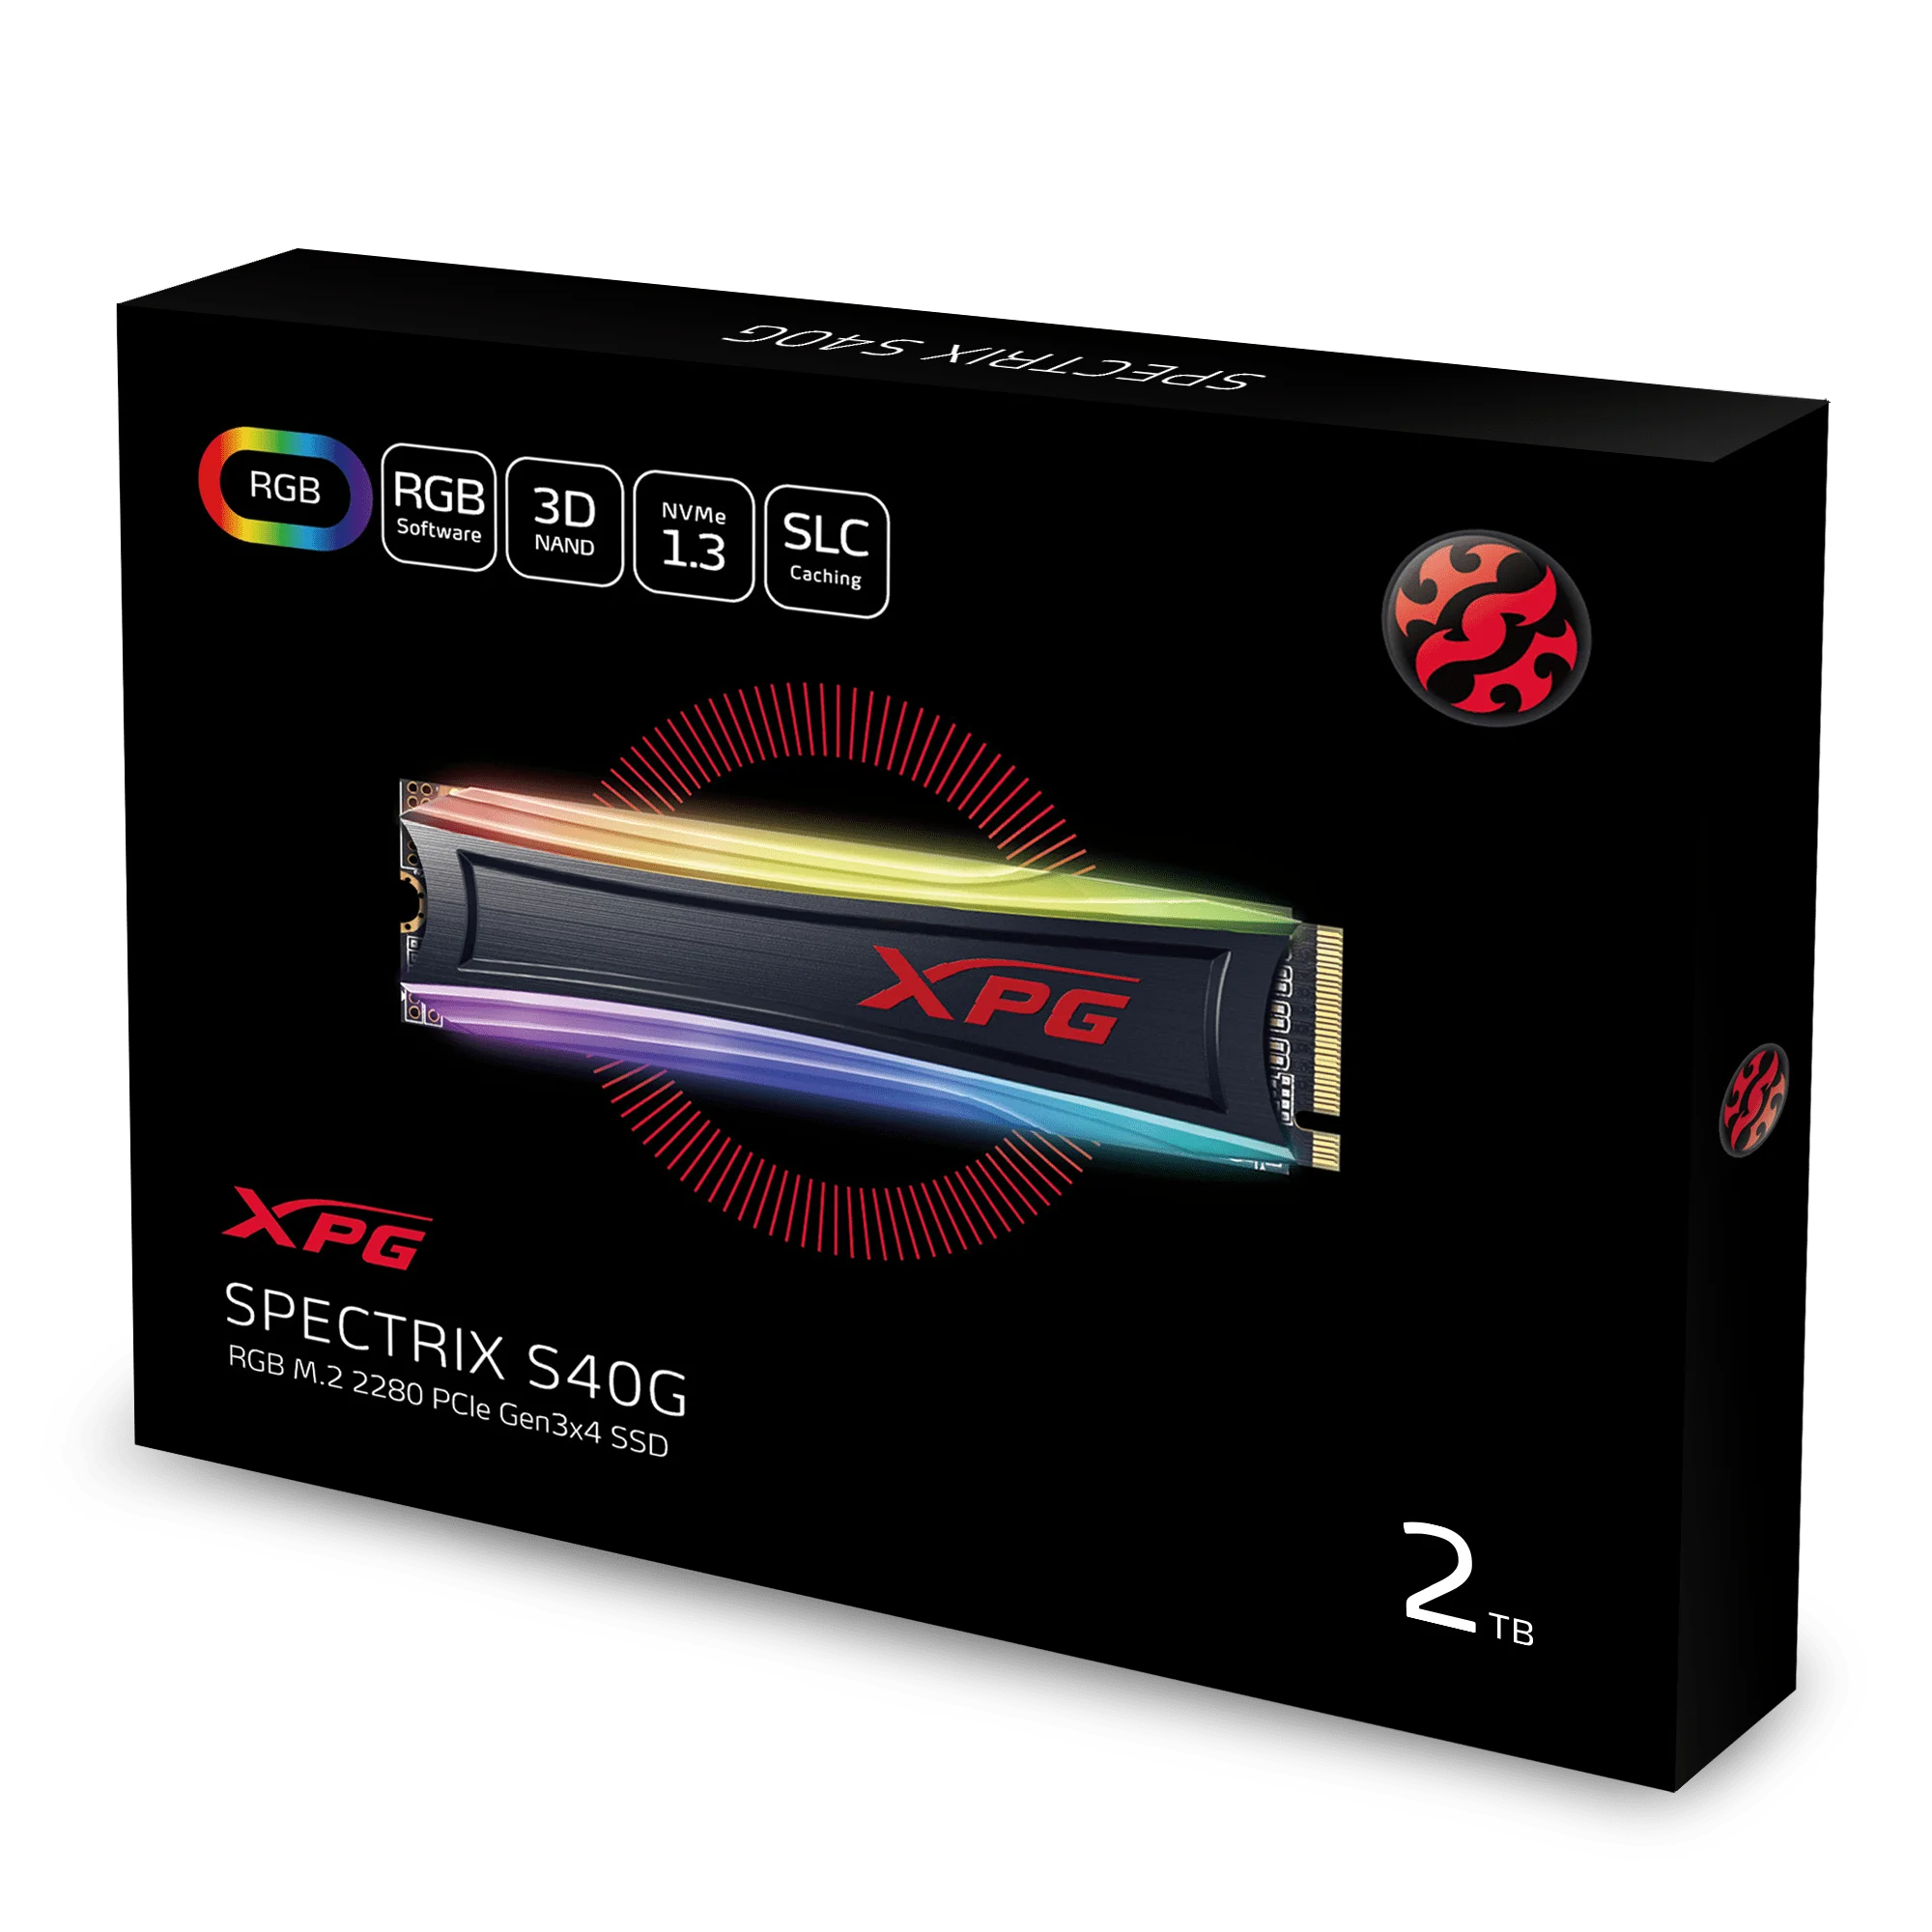 ADATA XPG S40G RGB M.2 2280 внутренний SSD 3D NAND PCIe 256 ГБ 512 ГБ 1 ТБ настраиваемые RGB световые эффекты Gen3x4 NVMe 1,3 для ПК